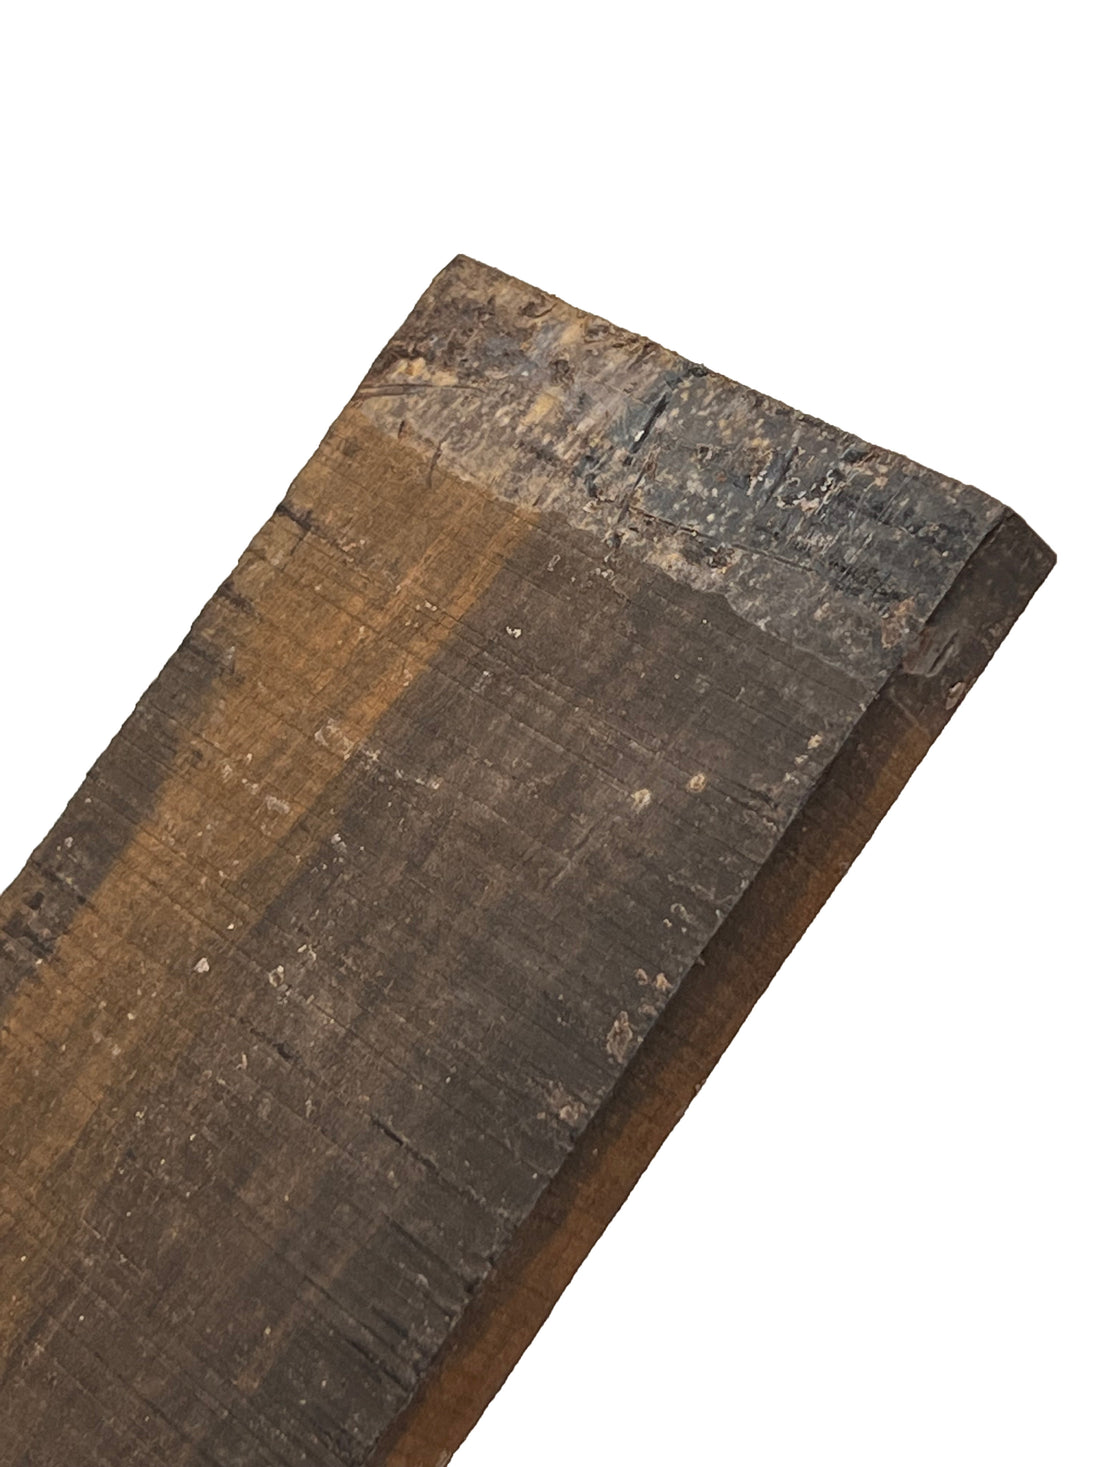 Gaboon Ebony Thin Stock Lumber Boards Wood Blank